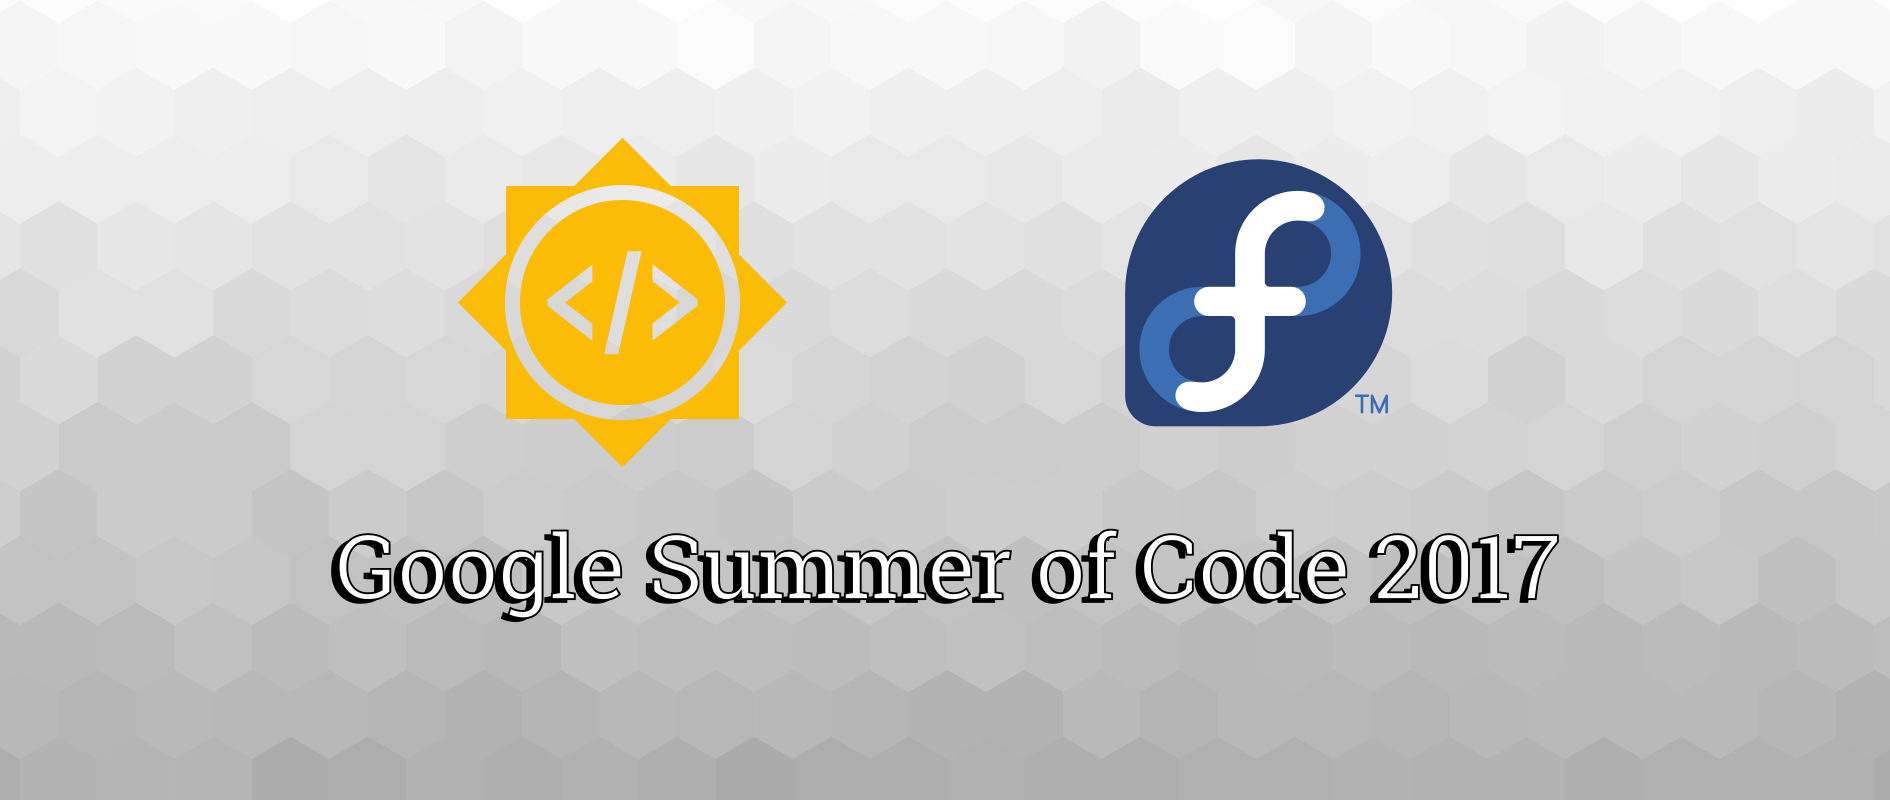 Google Summer of Code 2017 (GSoC) and Fedora